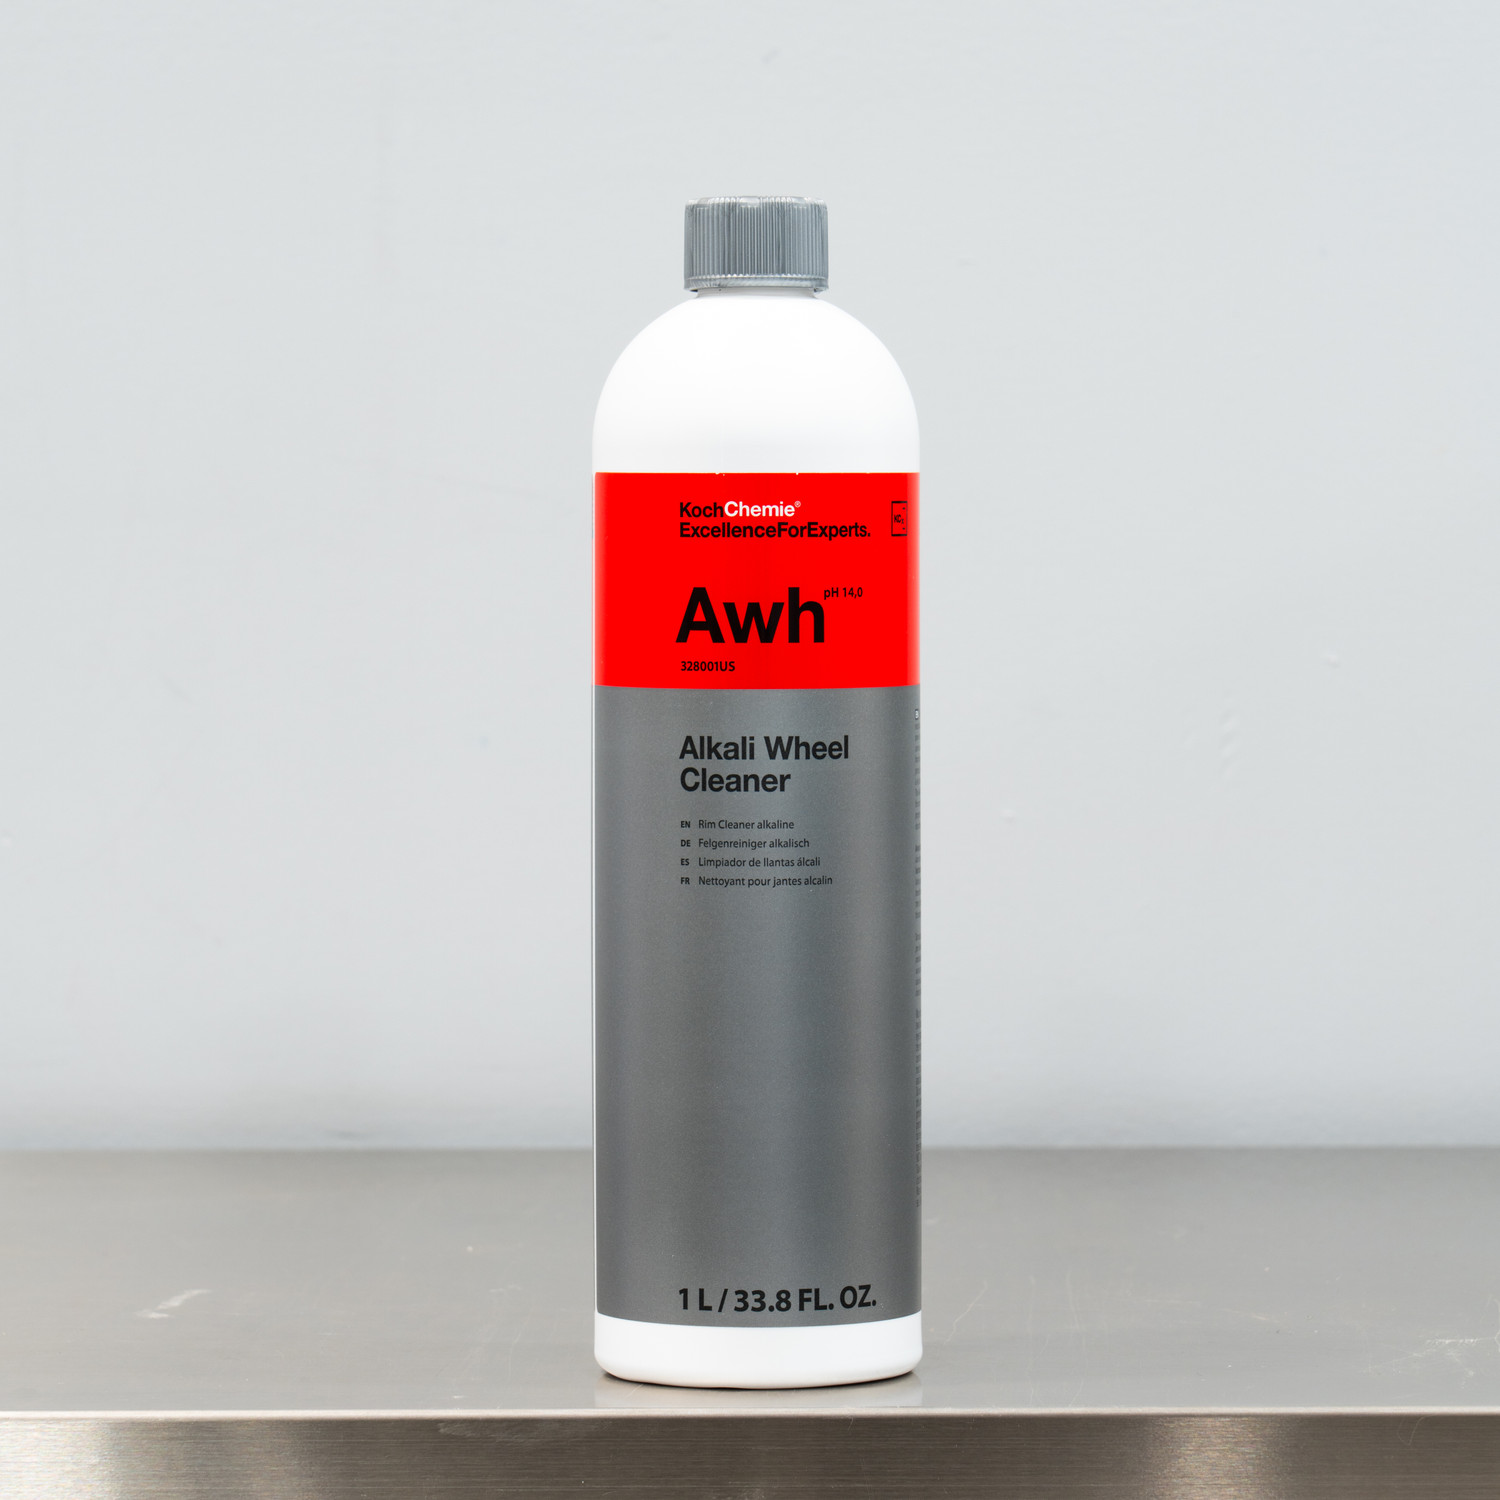 Koch Chemie Alkali Wheel Cleaner 1 Liter | Alkaline Awh